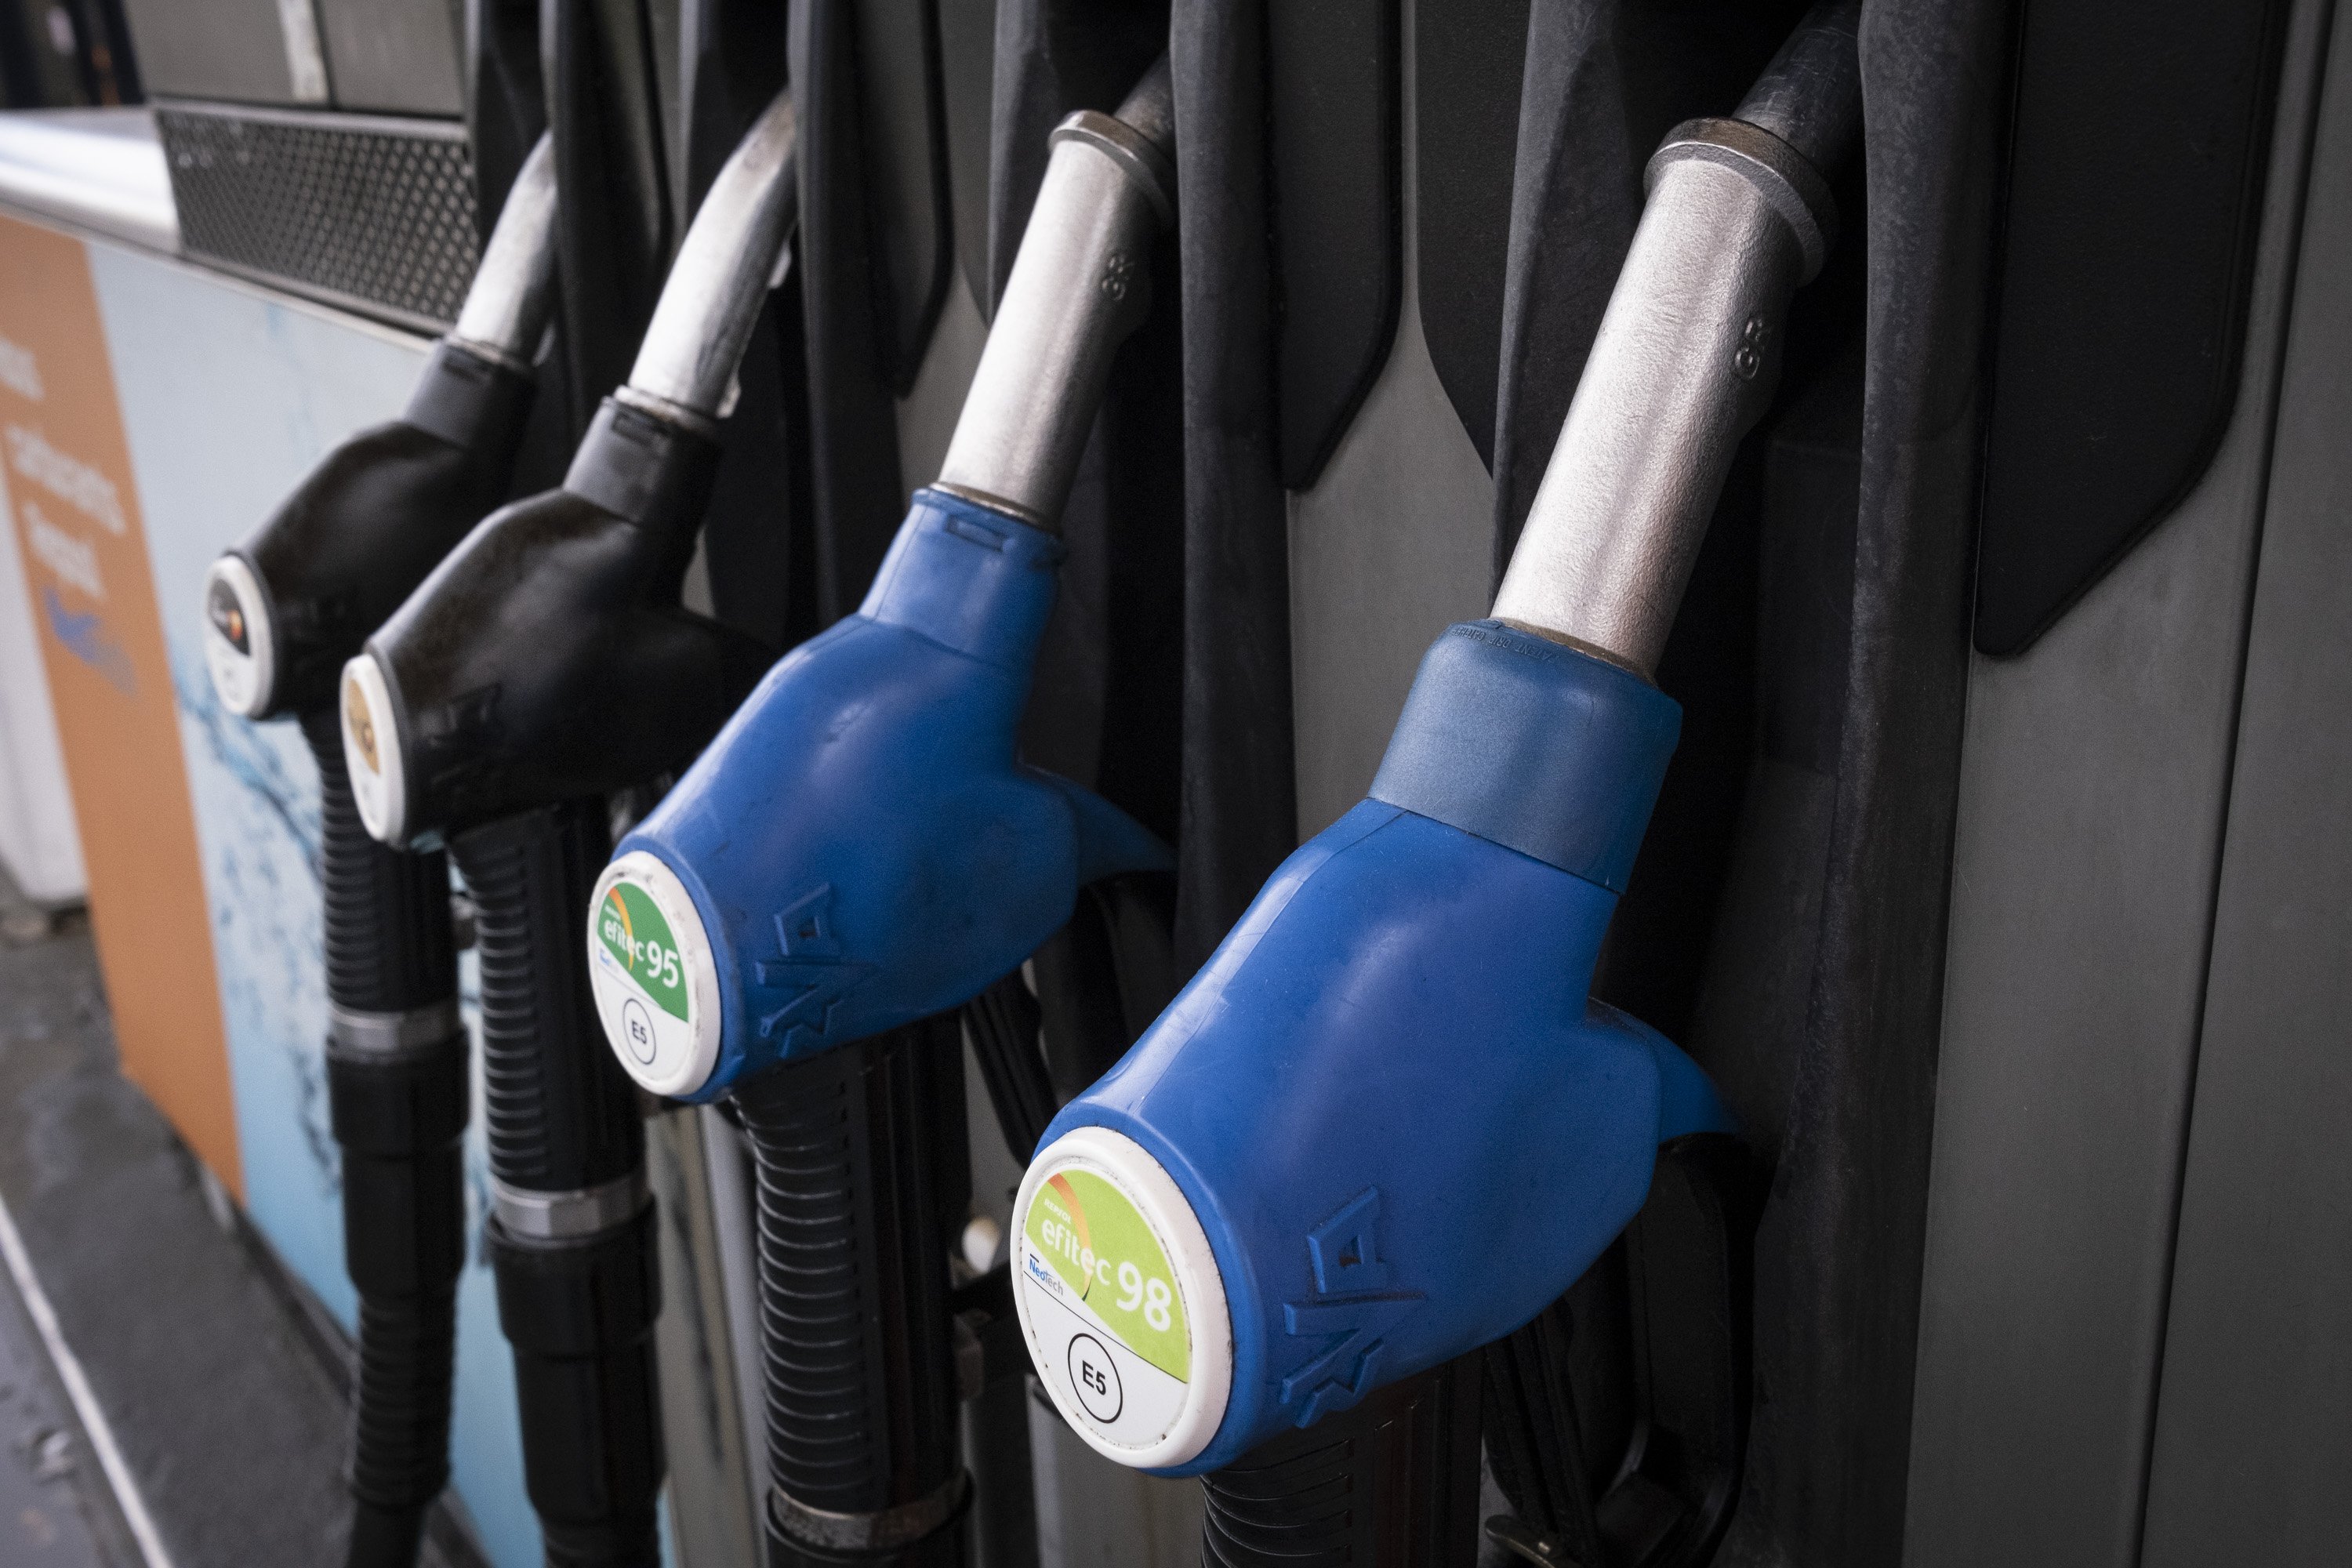 El descompte de 20 cèntims al litre de gasolina, en perill: el govern espanyol planeja modificar-lo